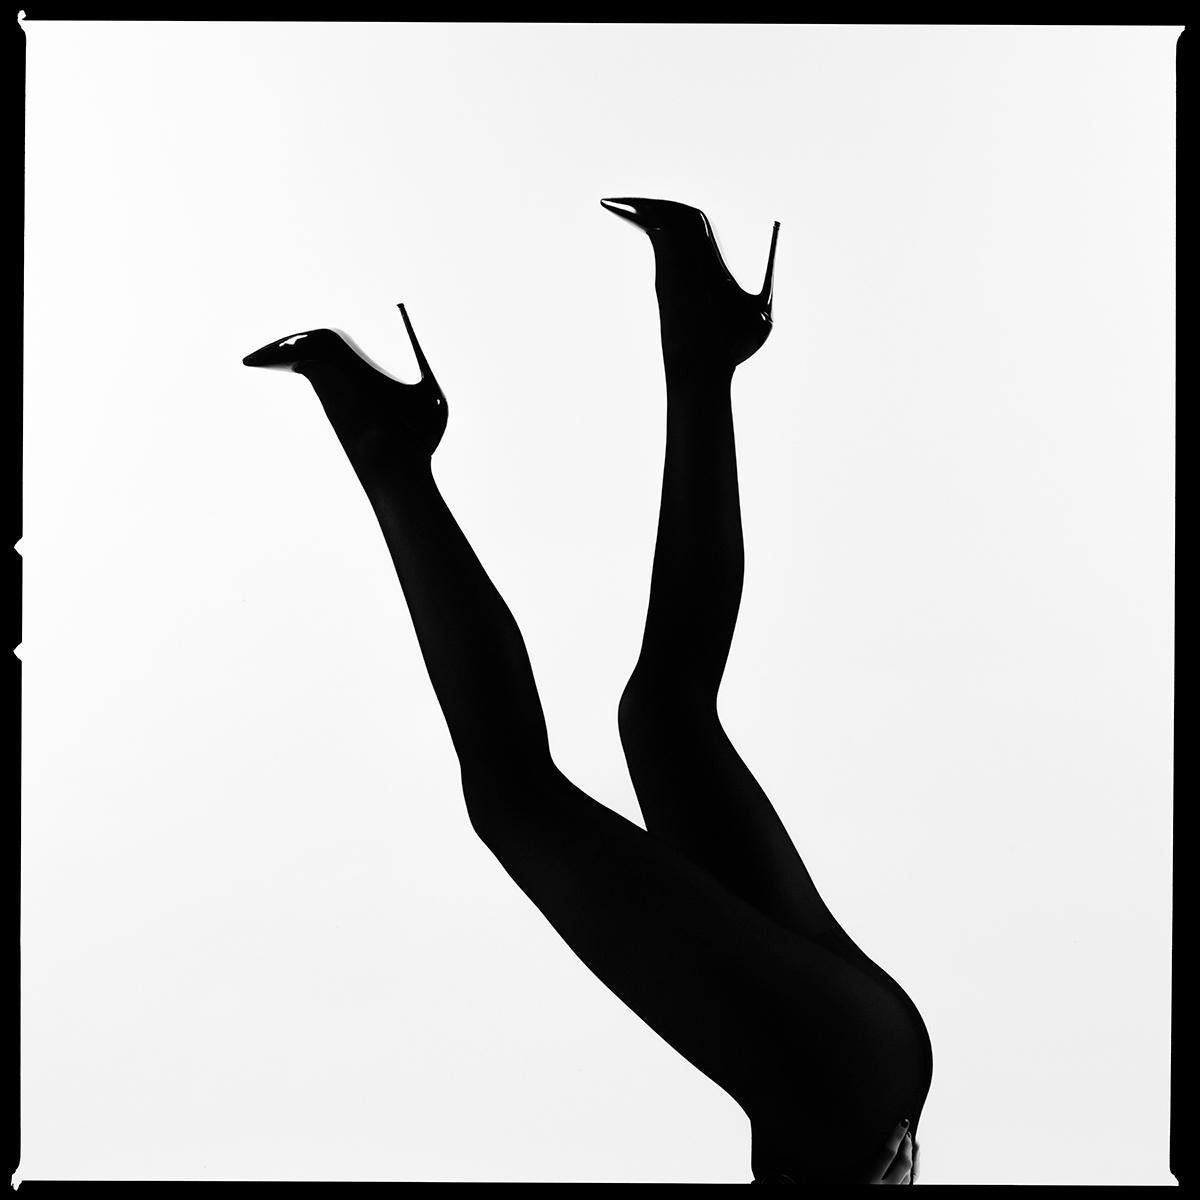 Tyler Shields - Legs Up Silhouette, Fotografie 2020, gedruckt nach